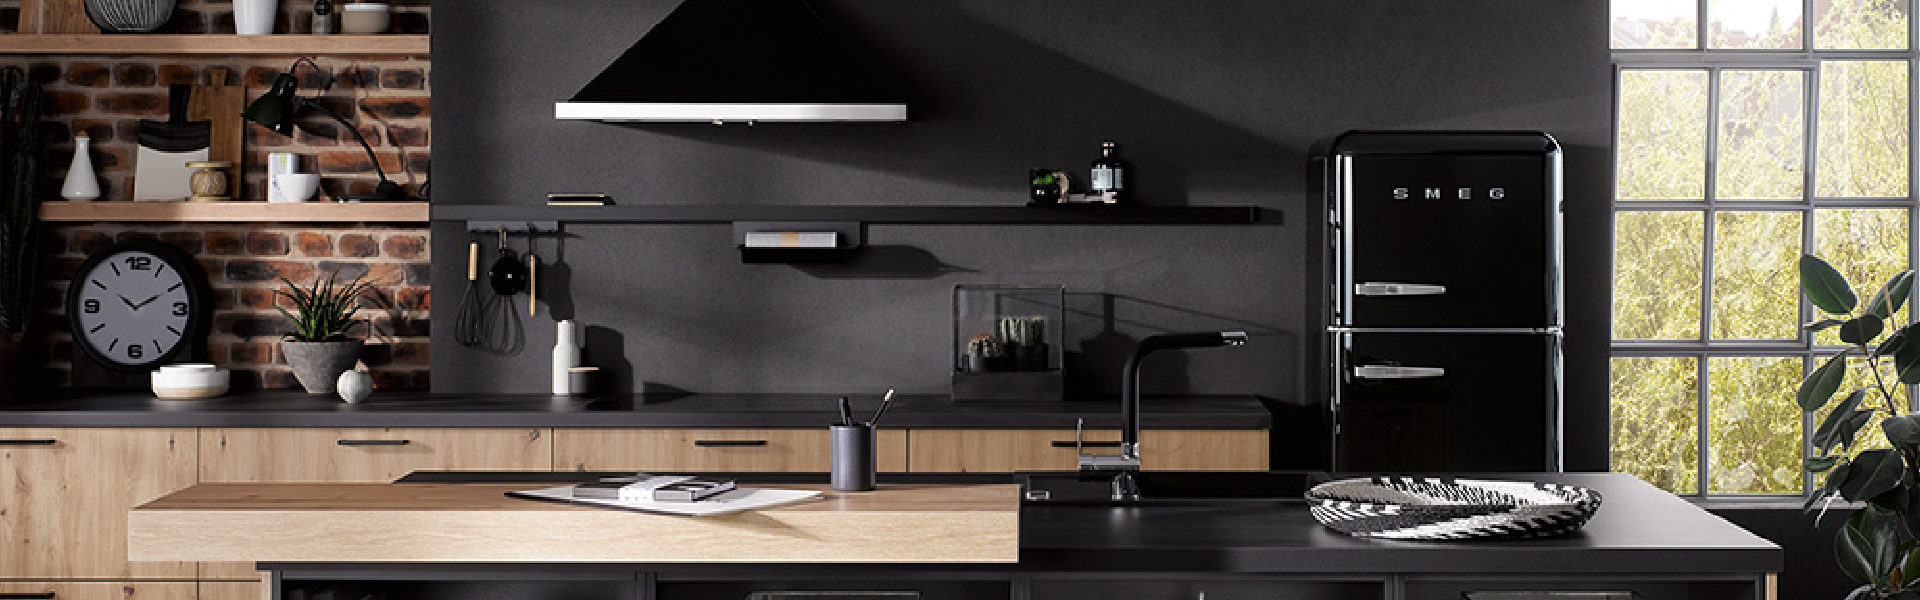 A perfect Modular kitchen design